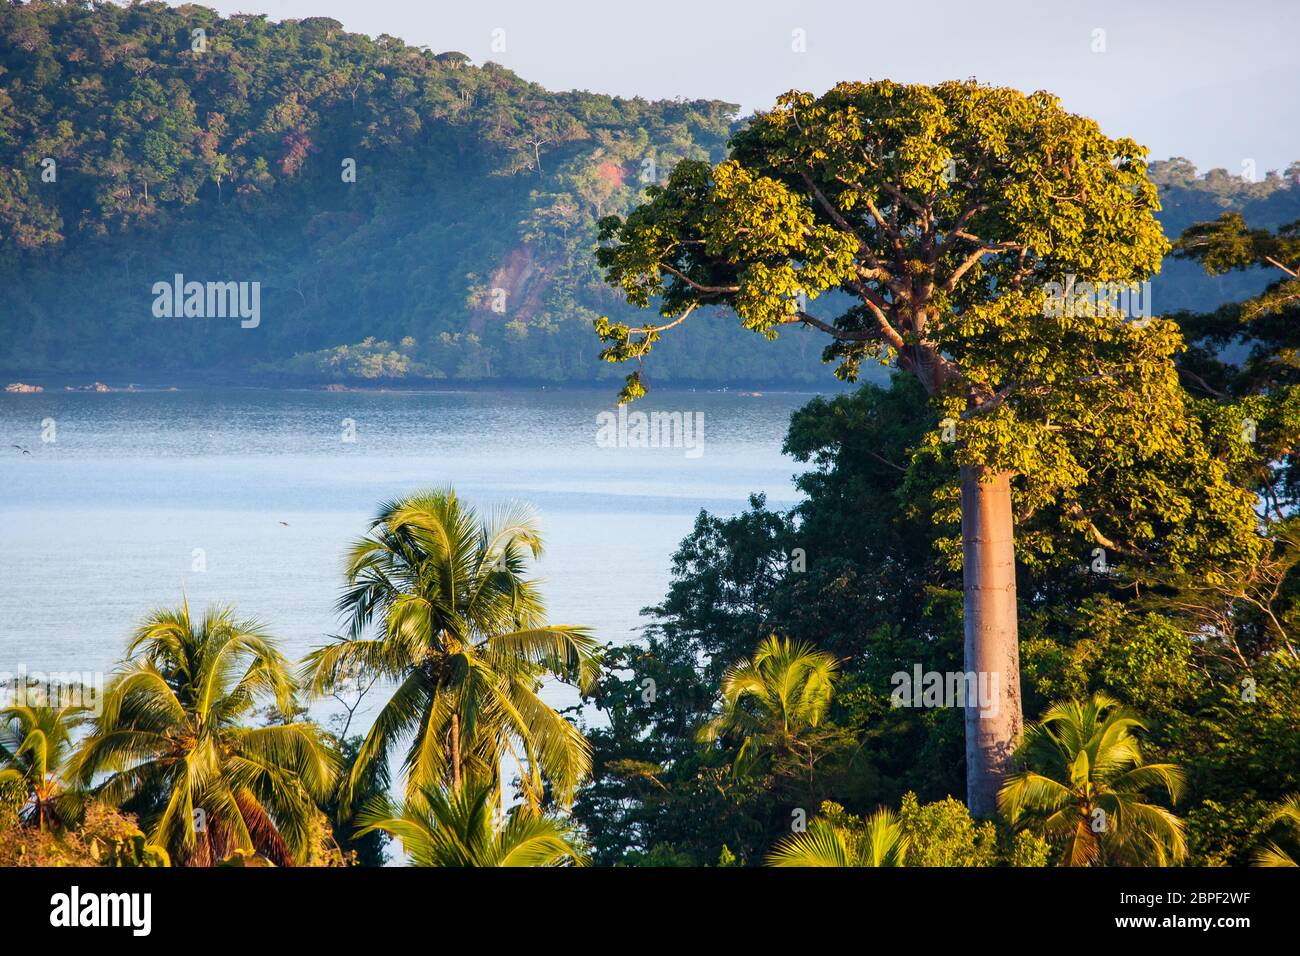 Panama landscape with lush coastal rainforest at Punta Patino nature reserve, Pacific coast, Darien province, Republic of Panama, Central America. Stock Photo